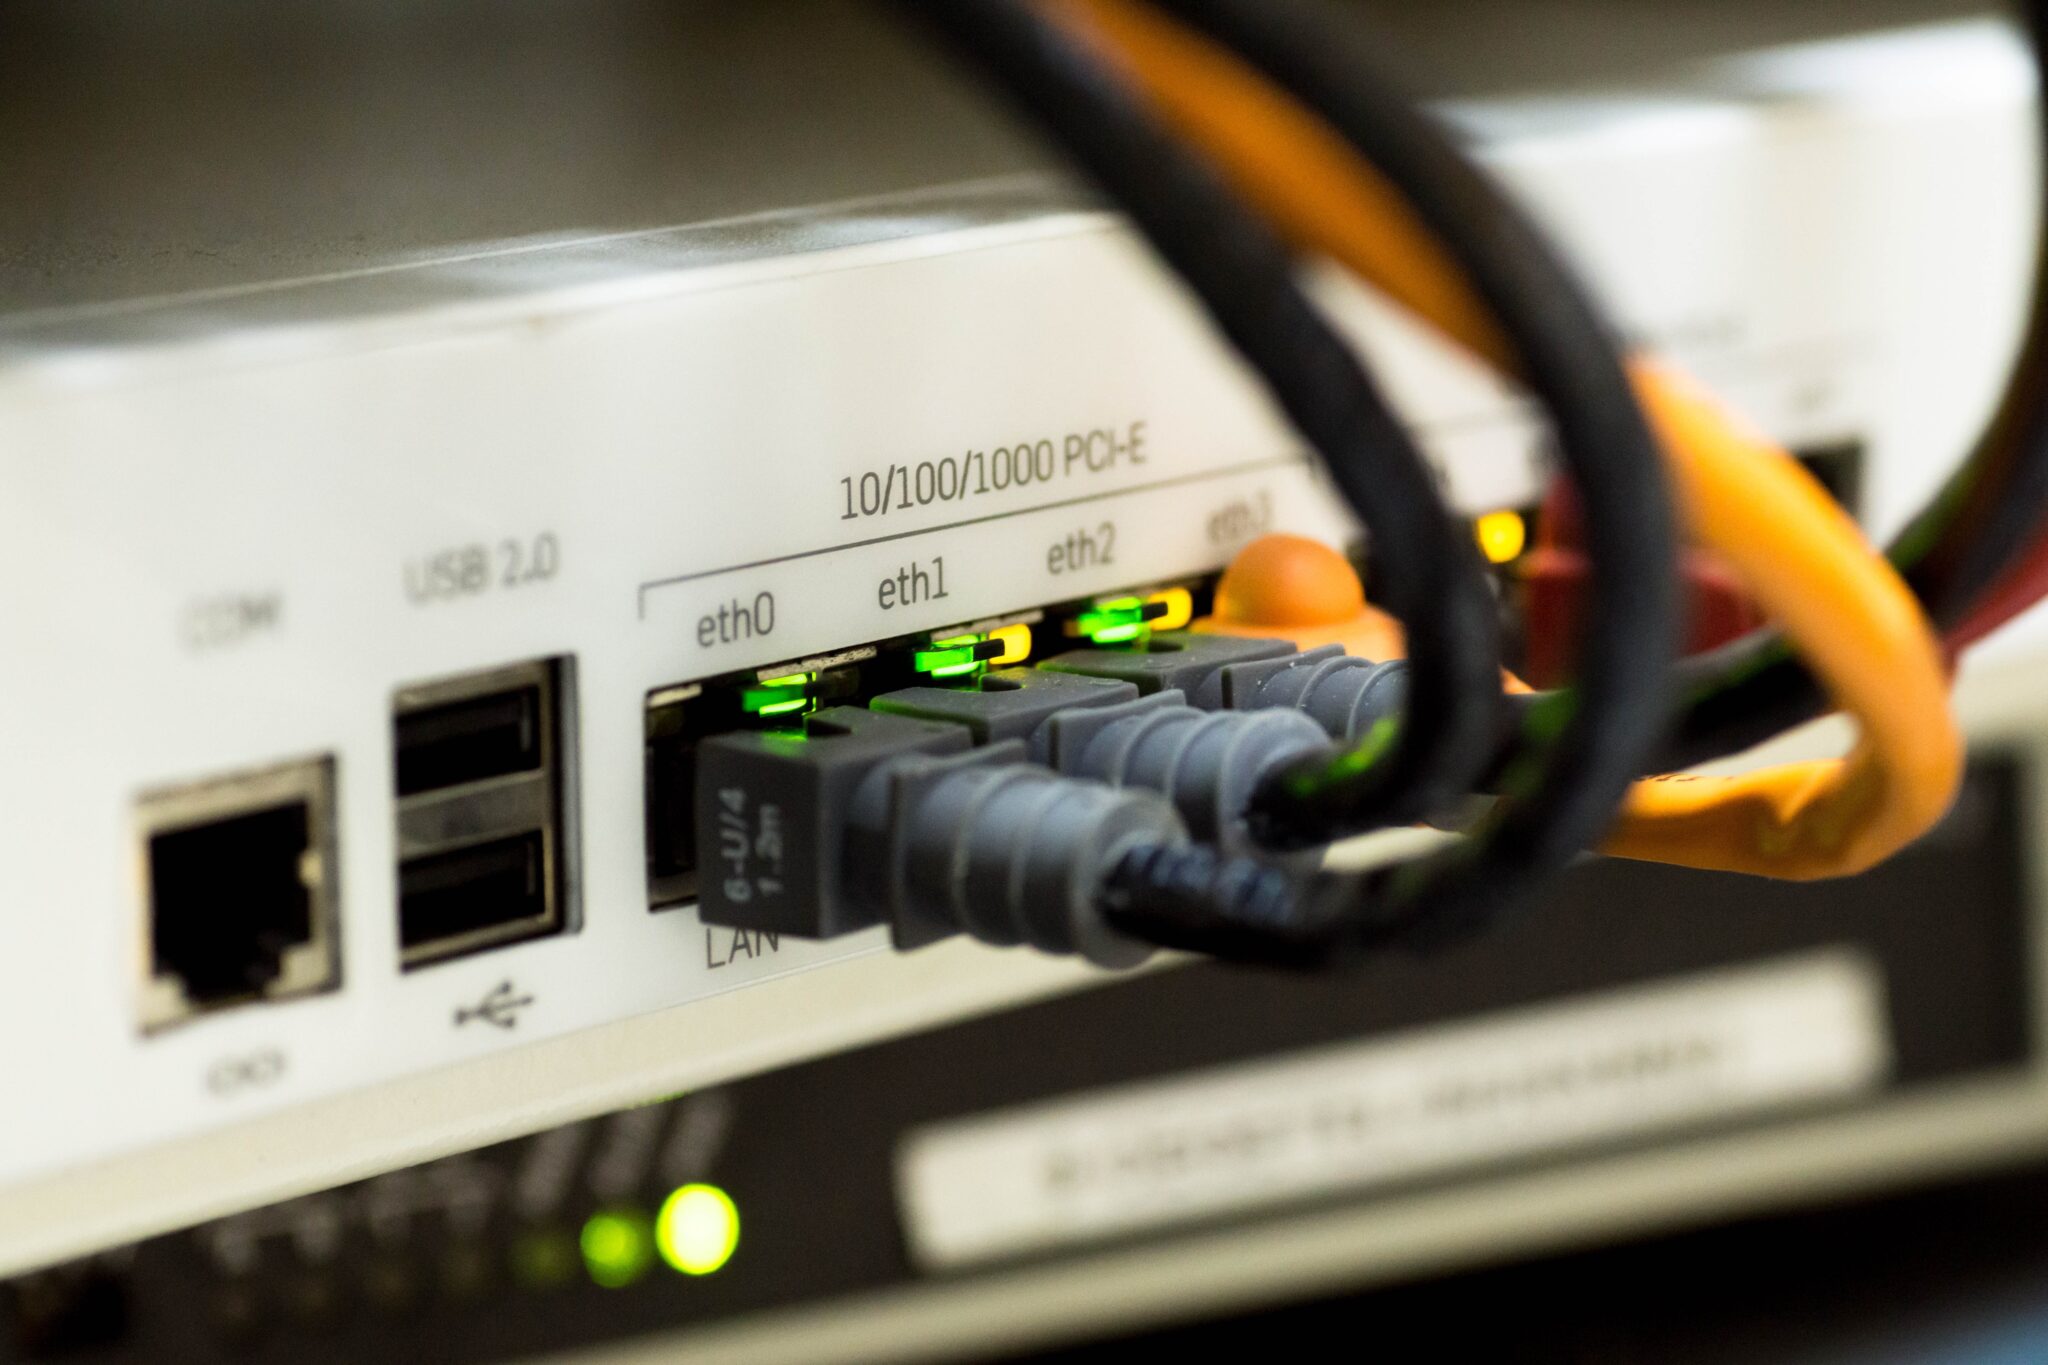 cat5 installation services in kenosha county, cat6 cable installation in kenosha, data cable